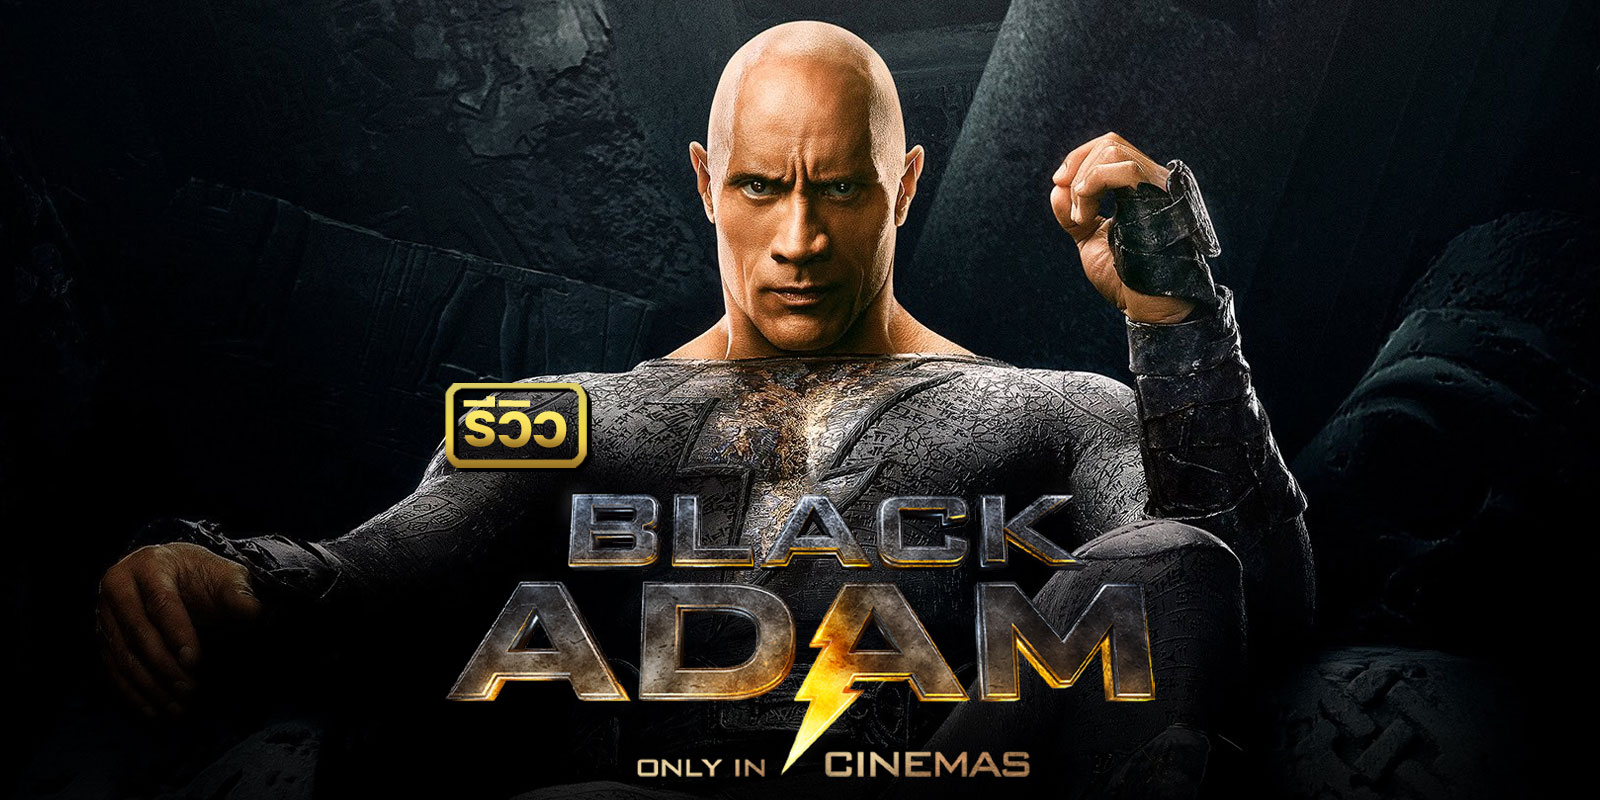 Black Adam (2022) แบล็ก อดัม